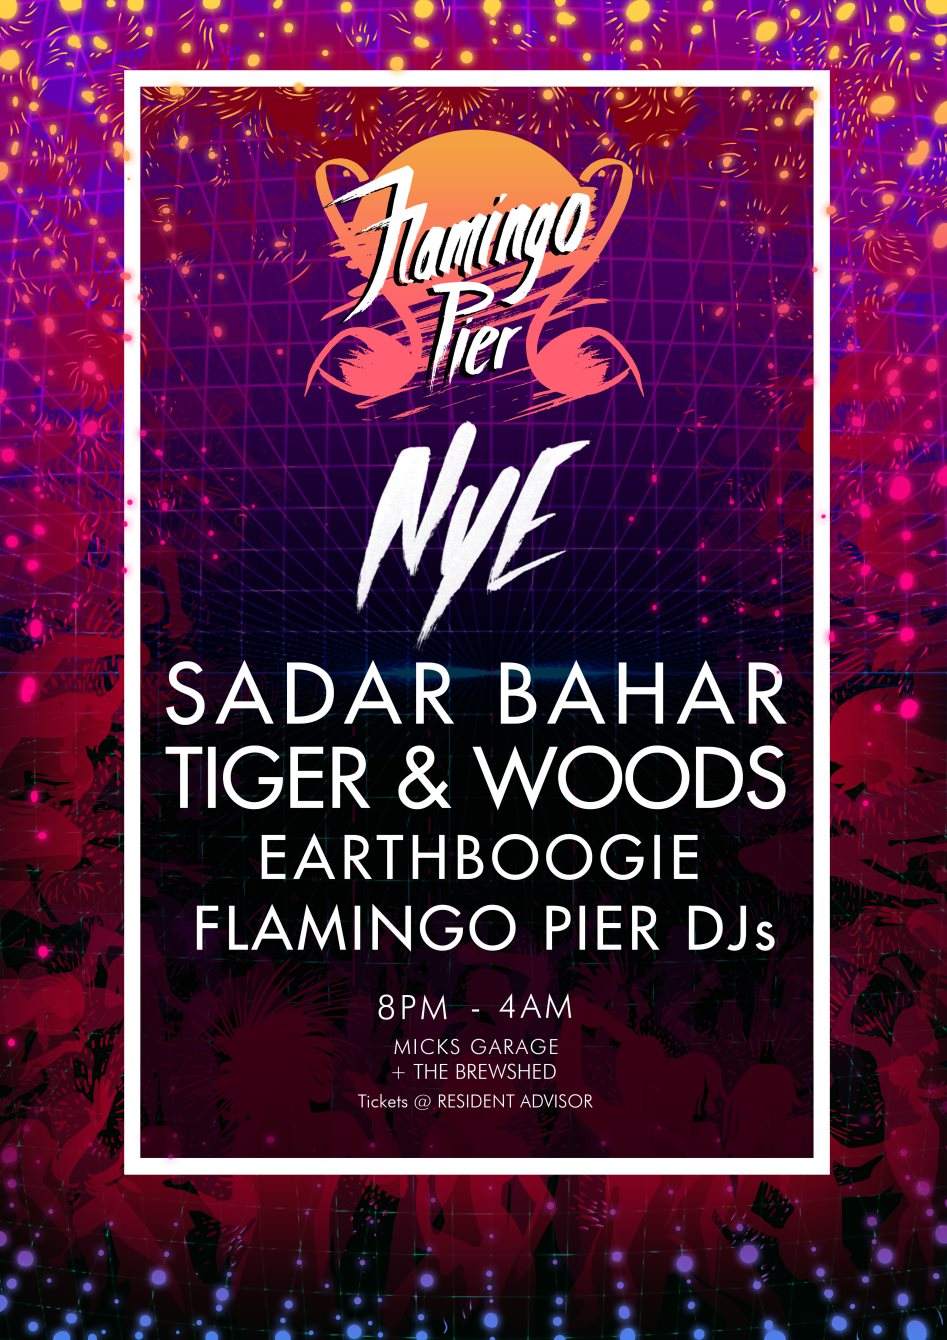 Flamingo Pier NYE with Sadar Bahar, Tiger & Woods, Earthboogie - Página trasera